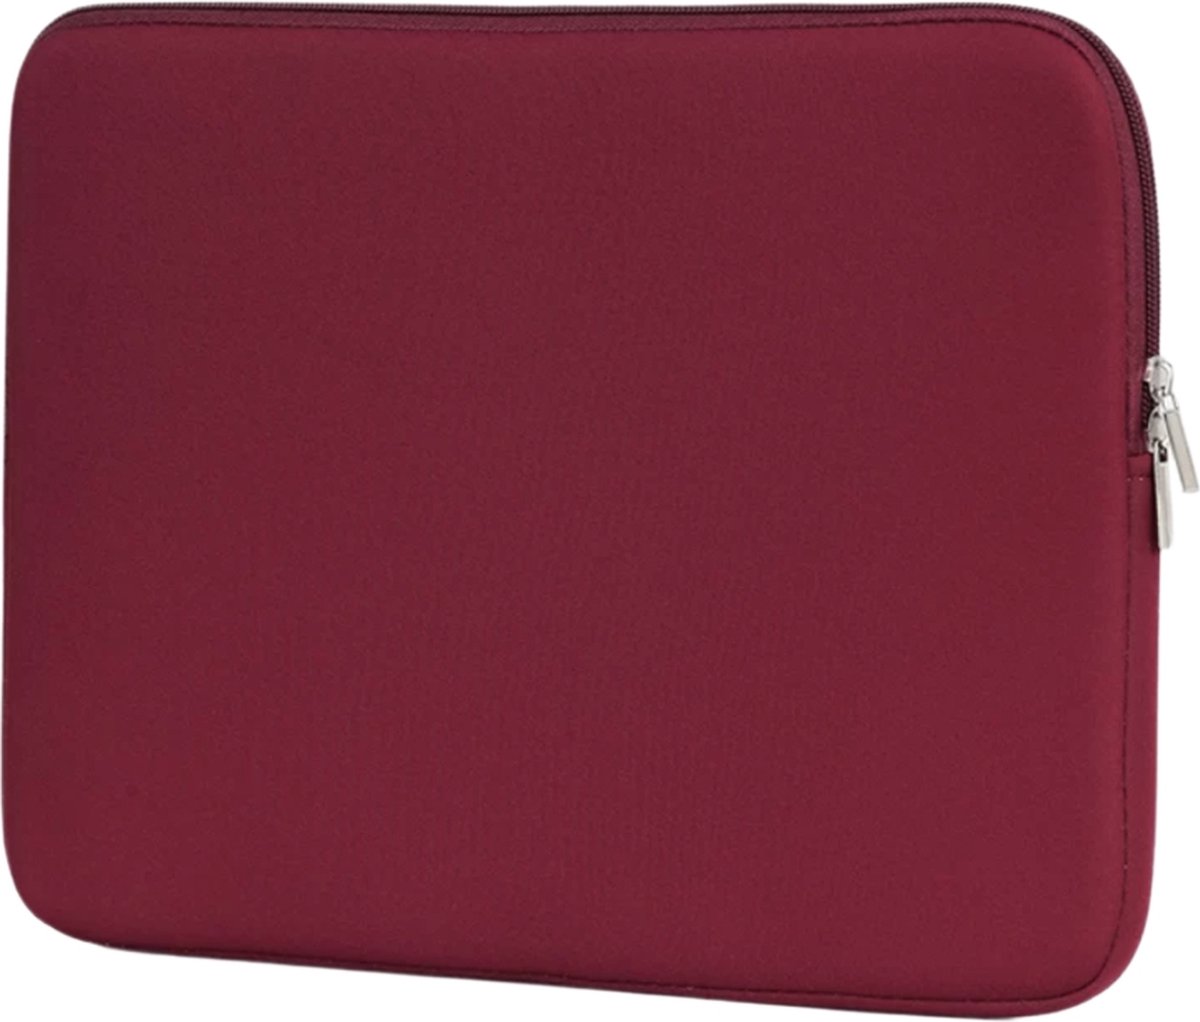 Handige universele laptophoes – case – sleeve – 14,6 inch – bordeaux rood- Schokproof